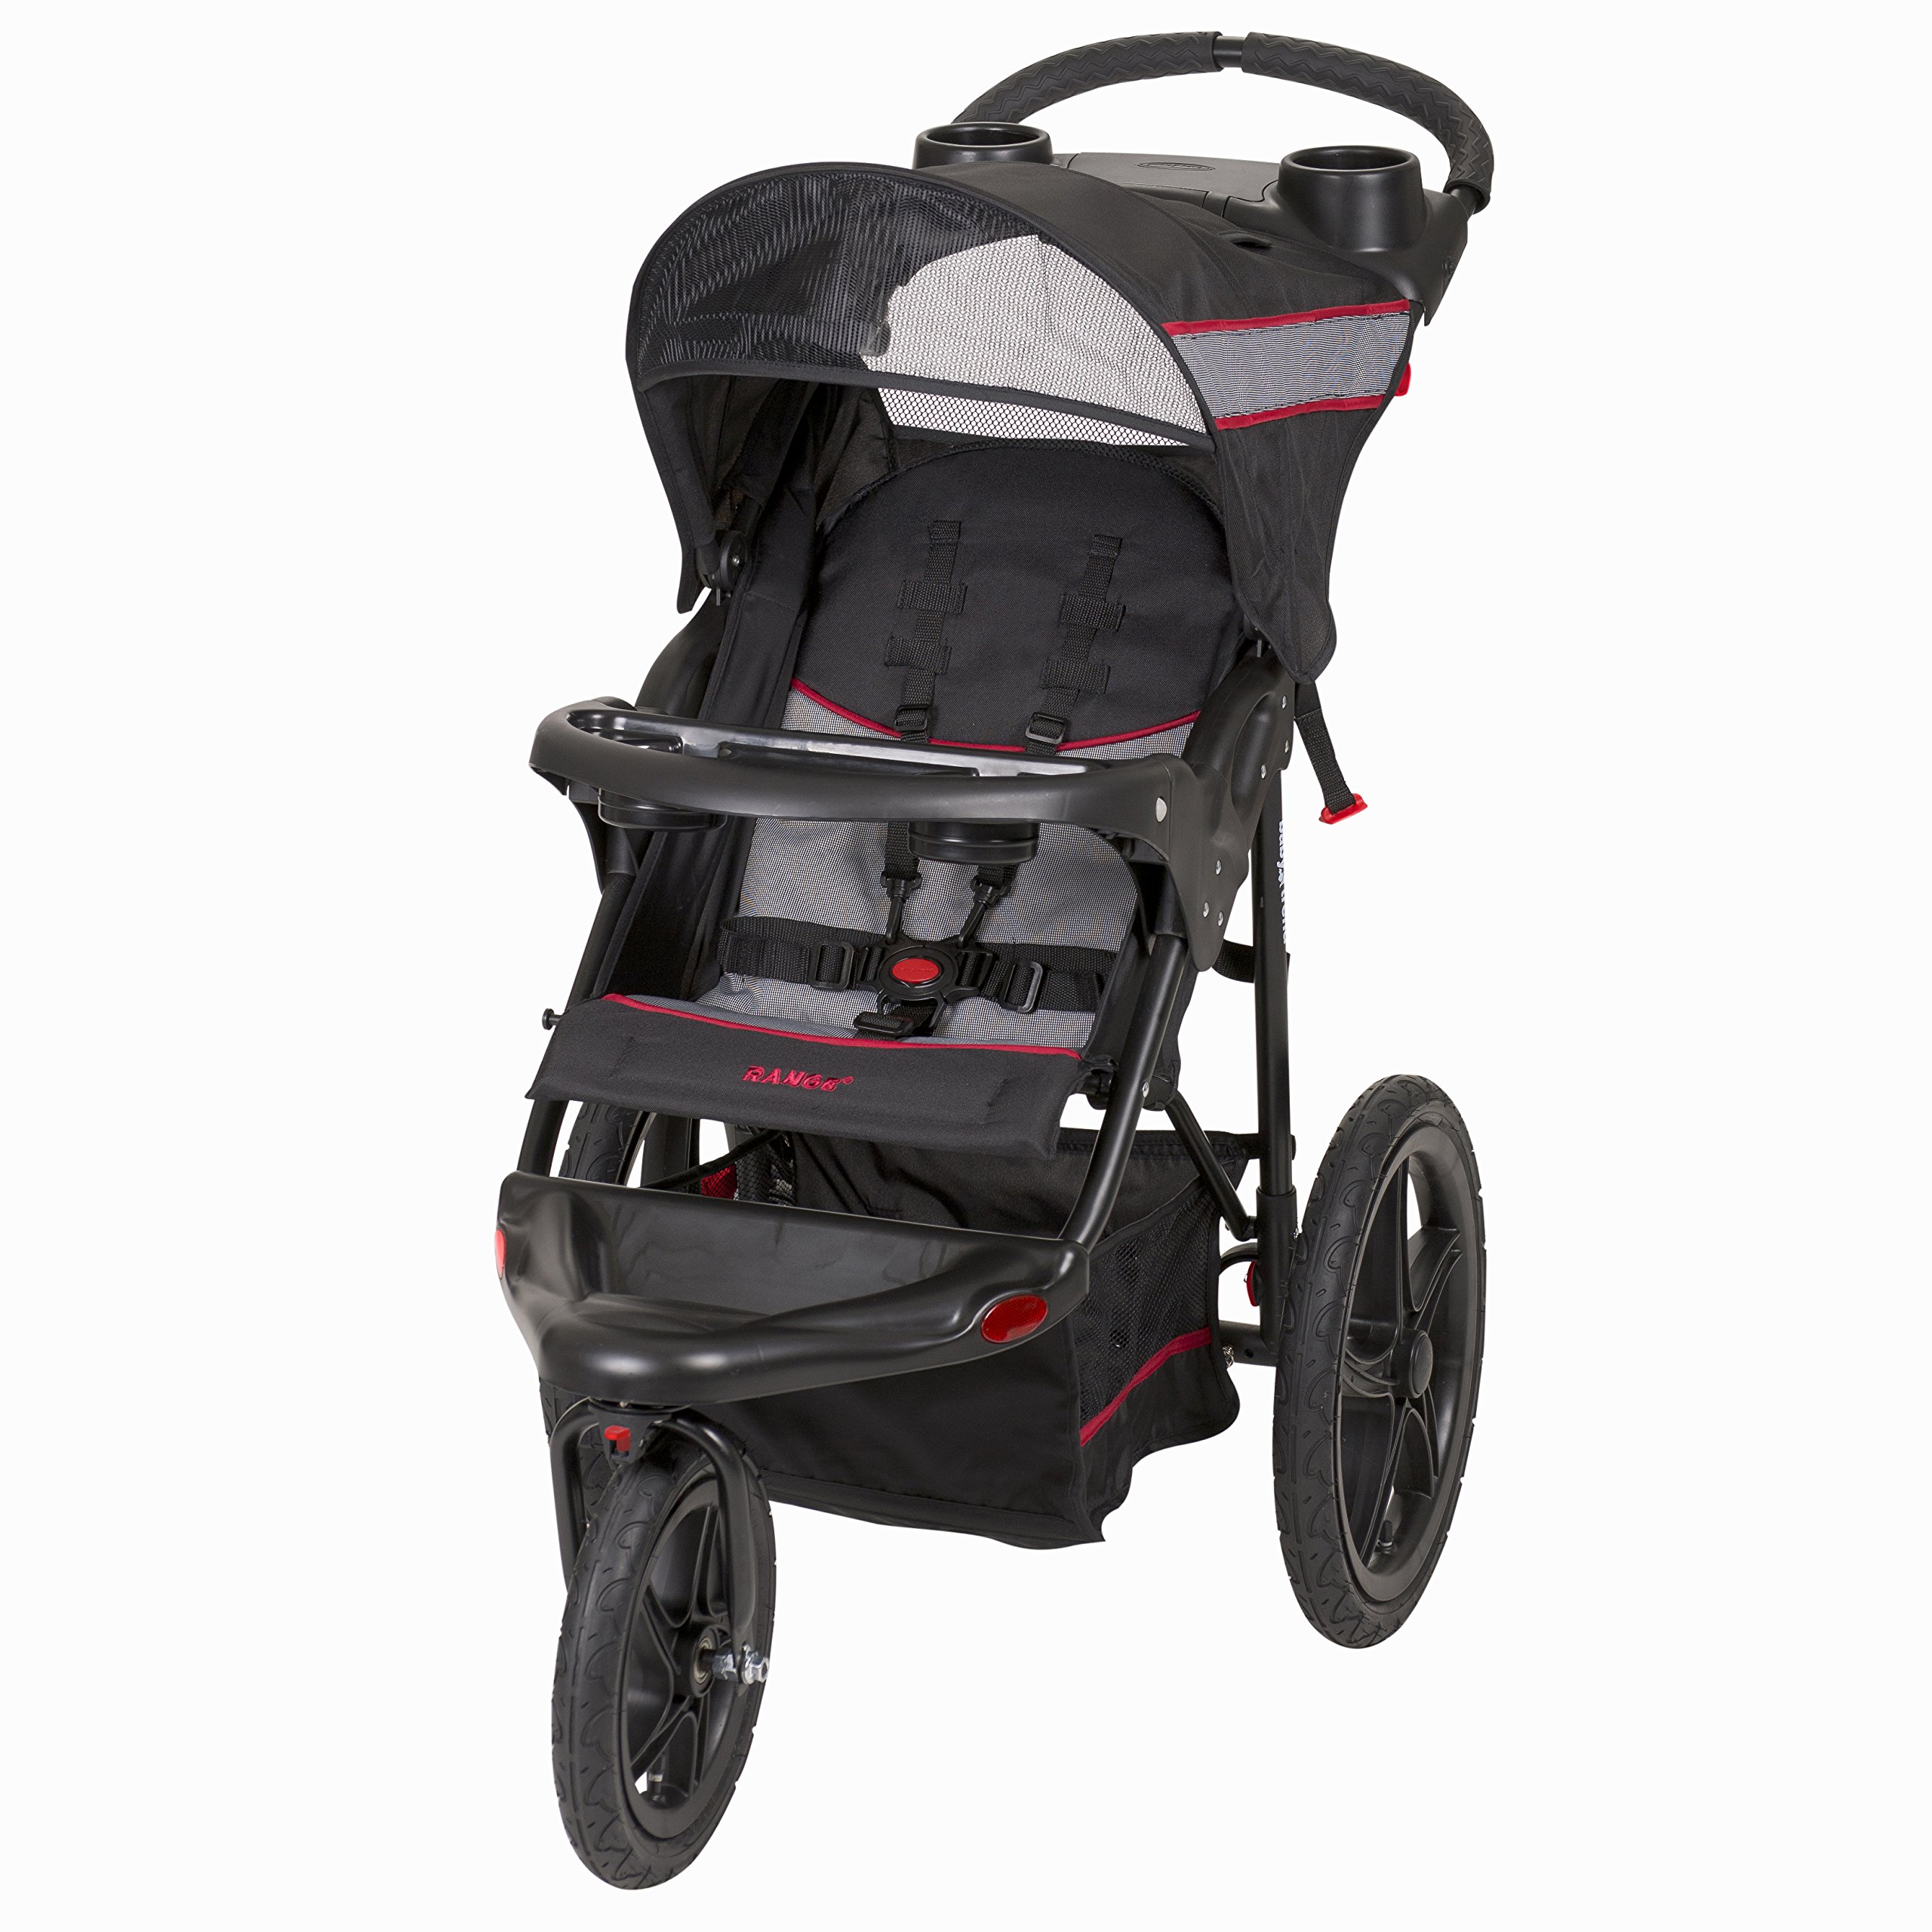 Baby Trend Range Jogger Stroller (Millennium) $88 + Free Shipping